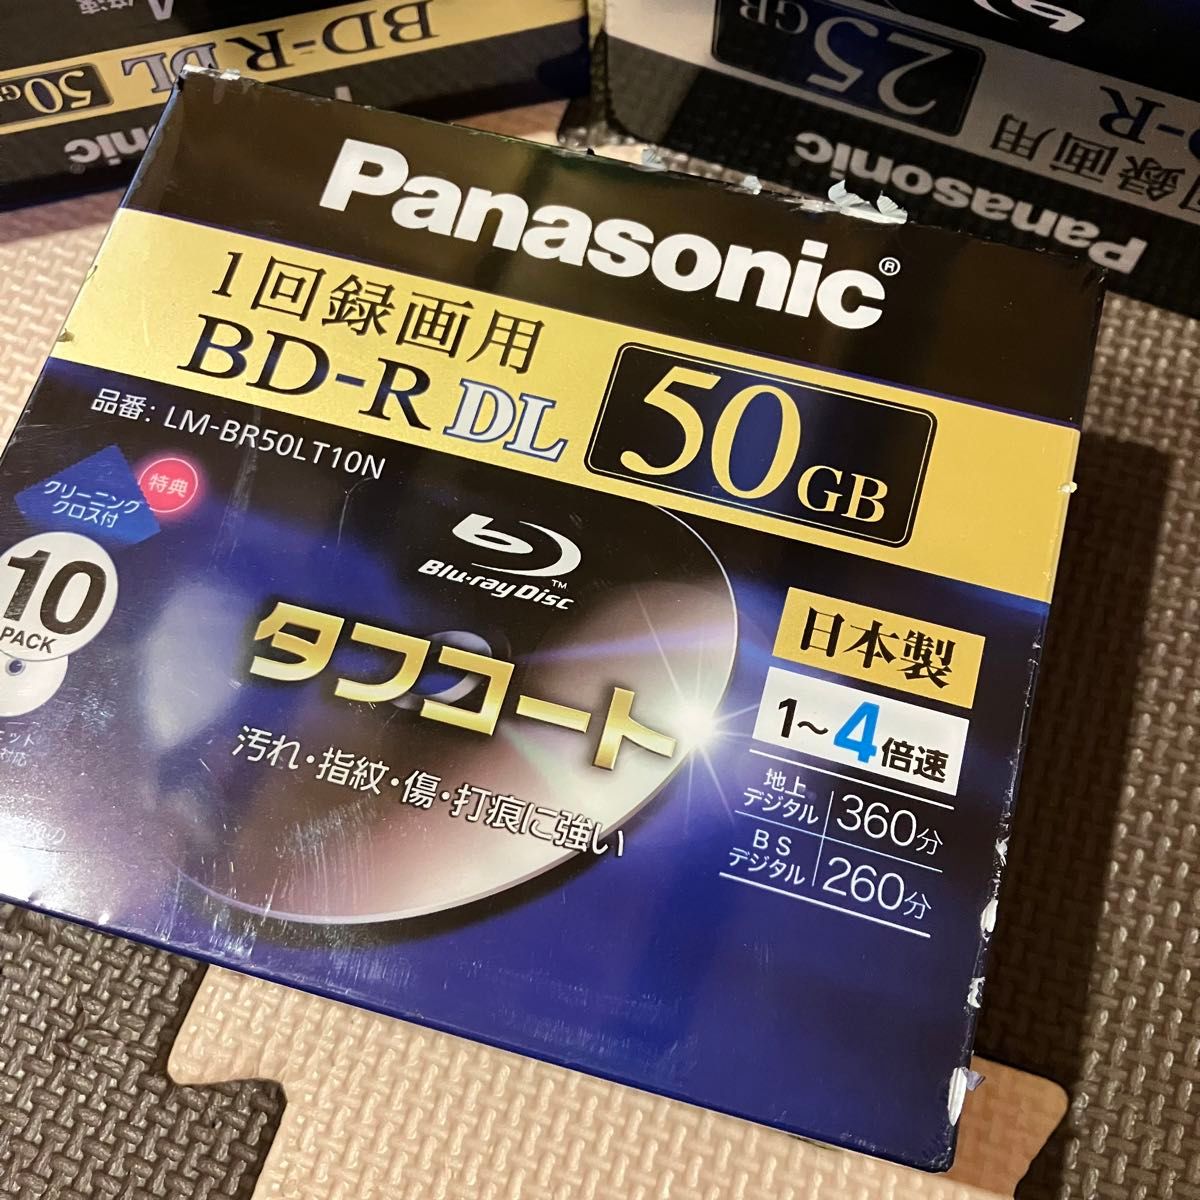 Panasonic 録画用4倍速BD-R 10枚パック LM-BR50LT10N